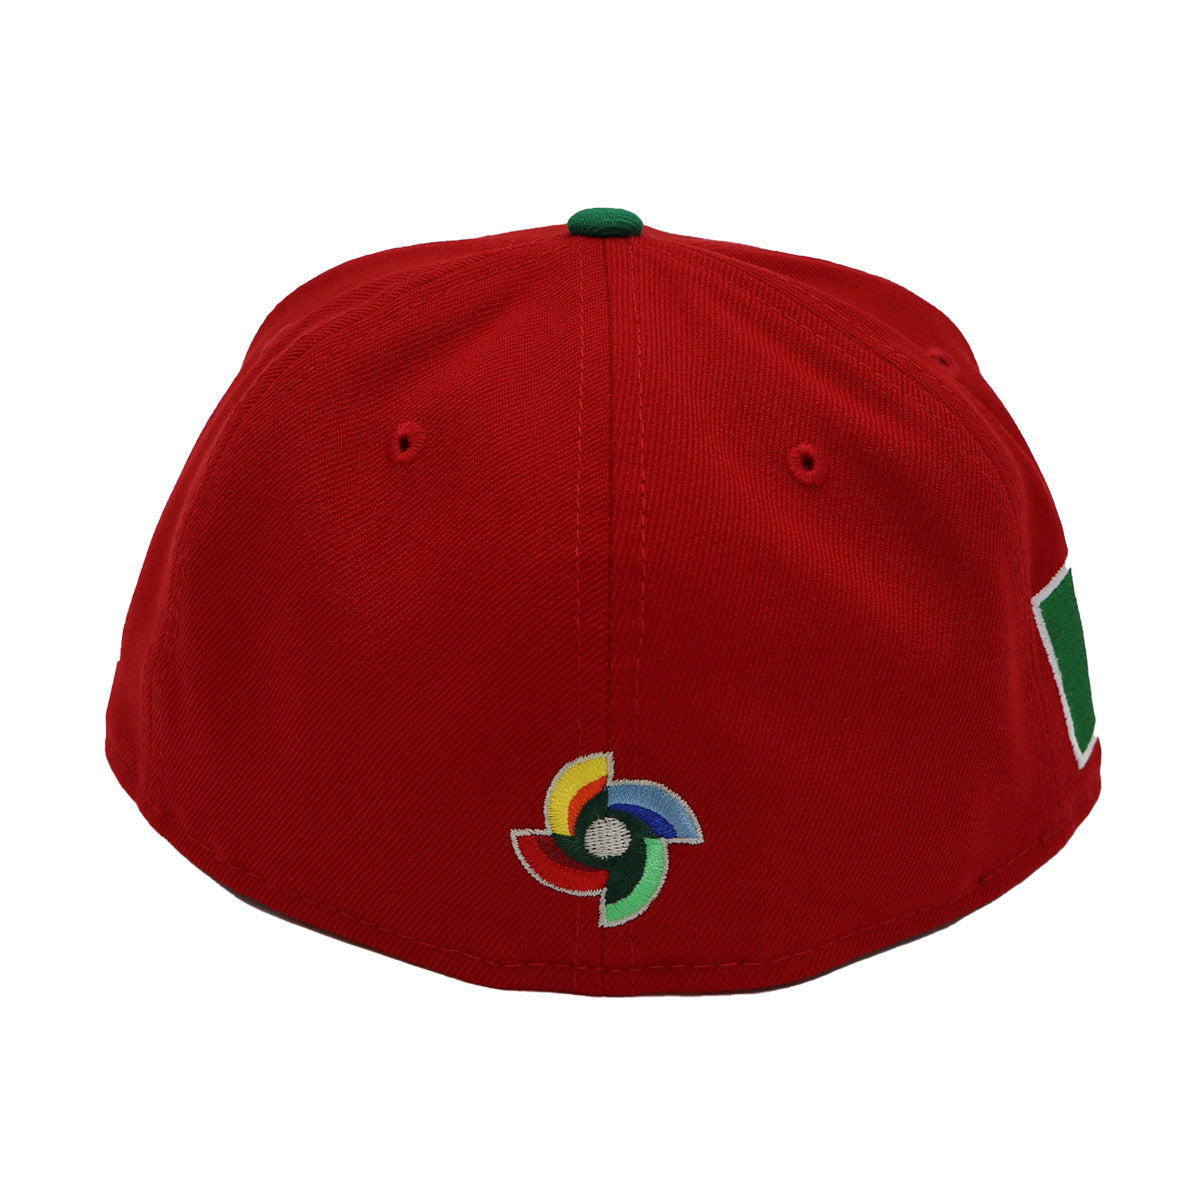 Mexico New Era Hat Baseball Red/Green World Caliwearsd – 59Fifty Classic 2-Tone